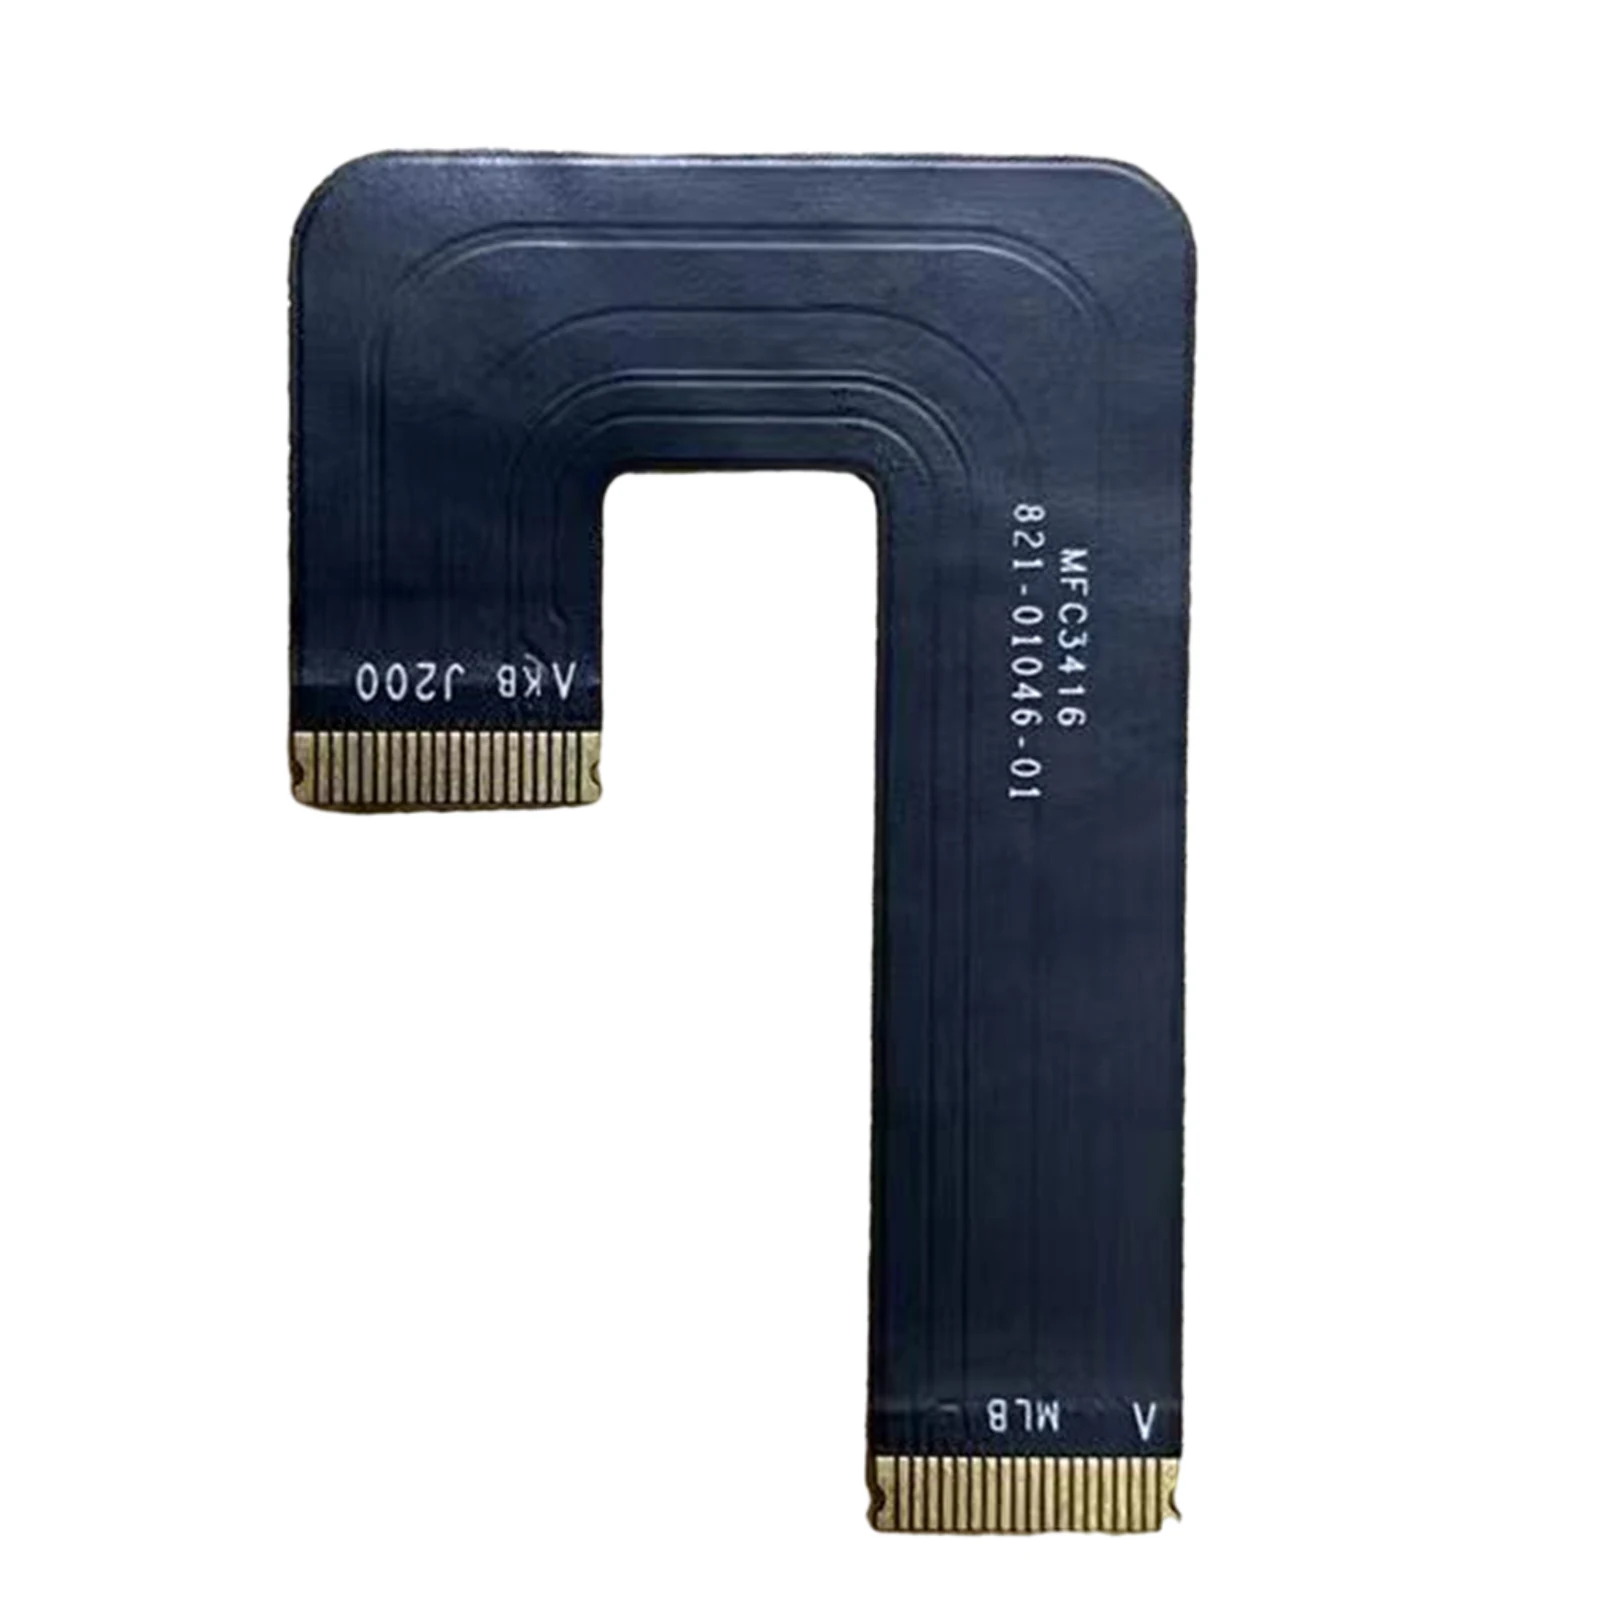 Flex Cable Fits for Macbook Pro 13